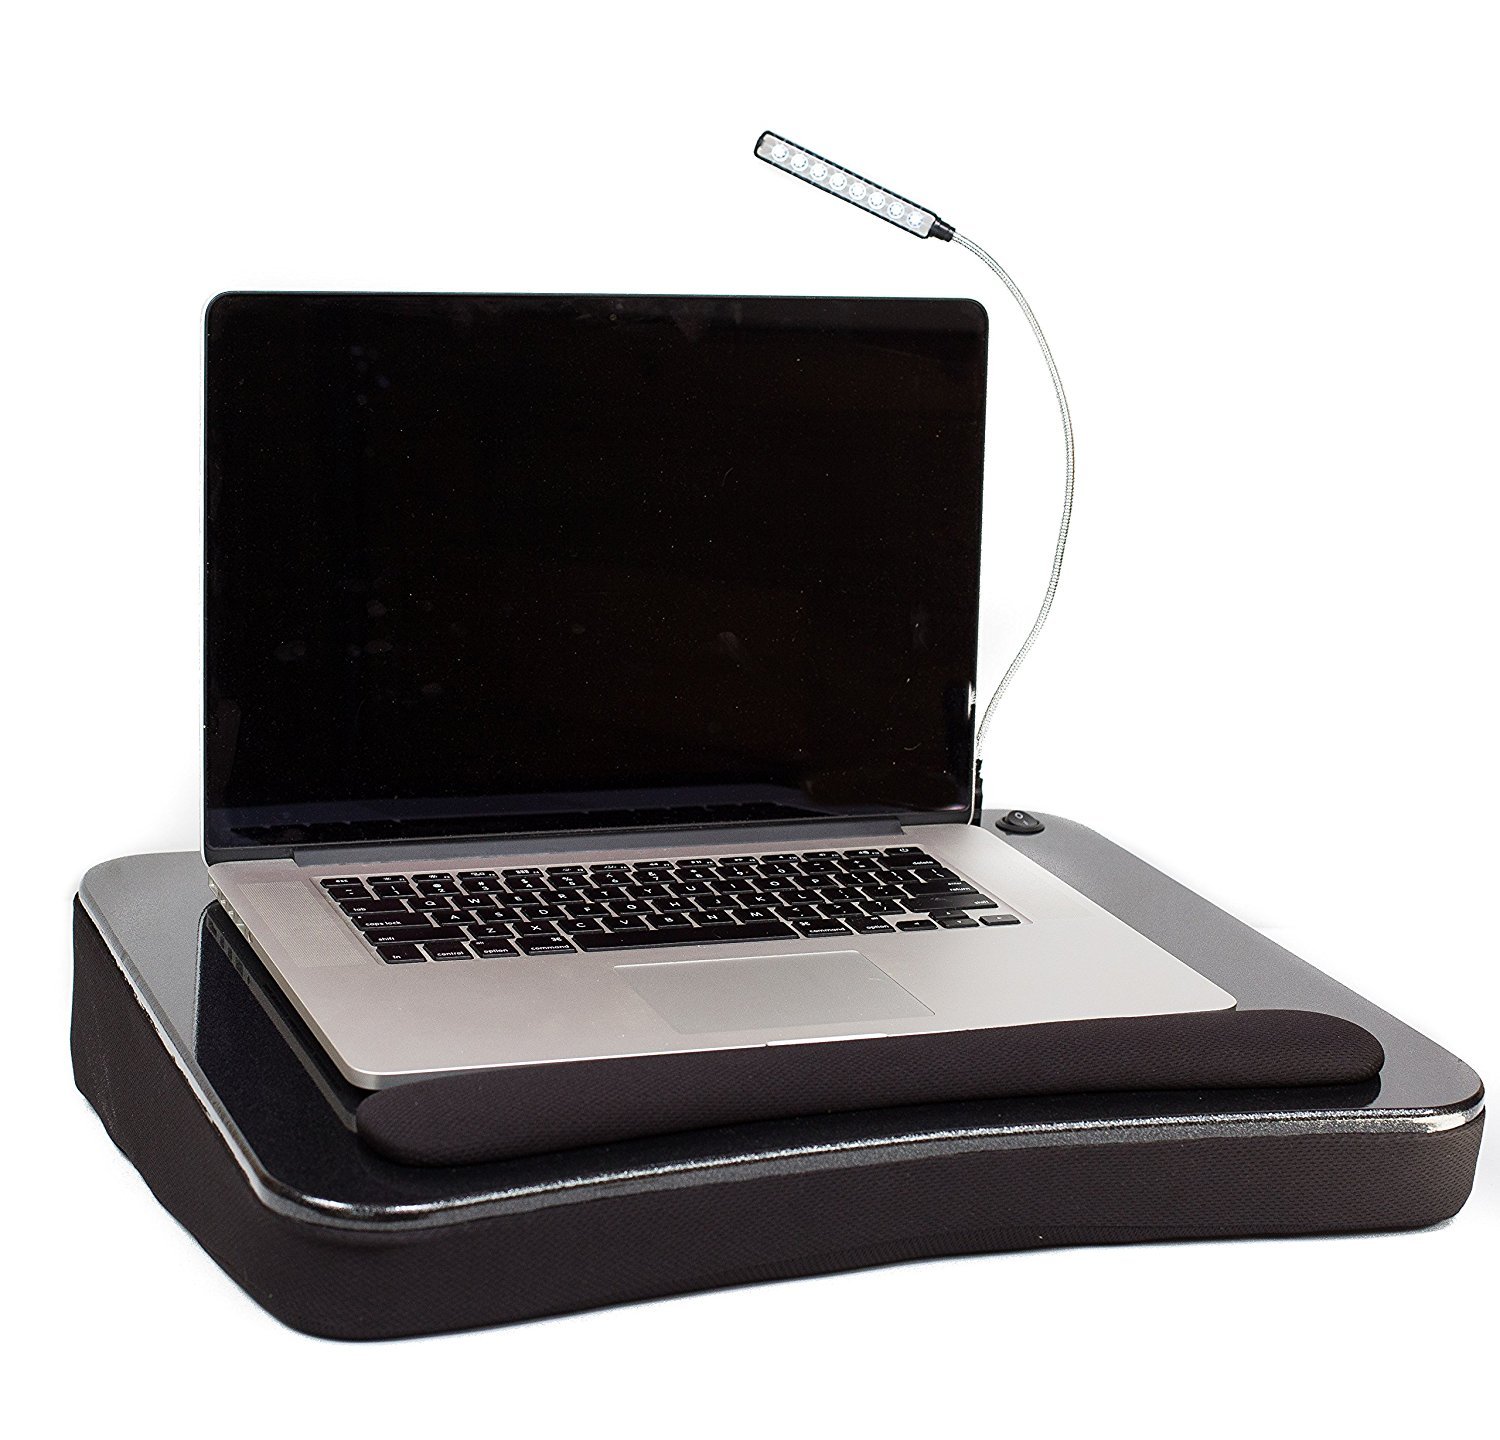 Sofia + Sam Lap Desk with USB Light and Tablet Slot - Black - image 2 of 7